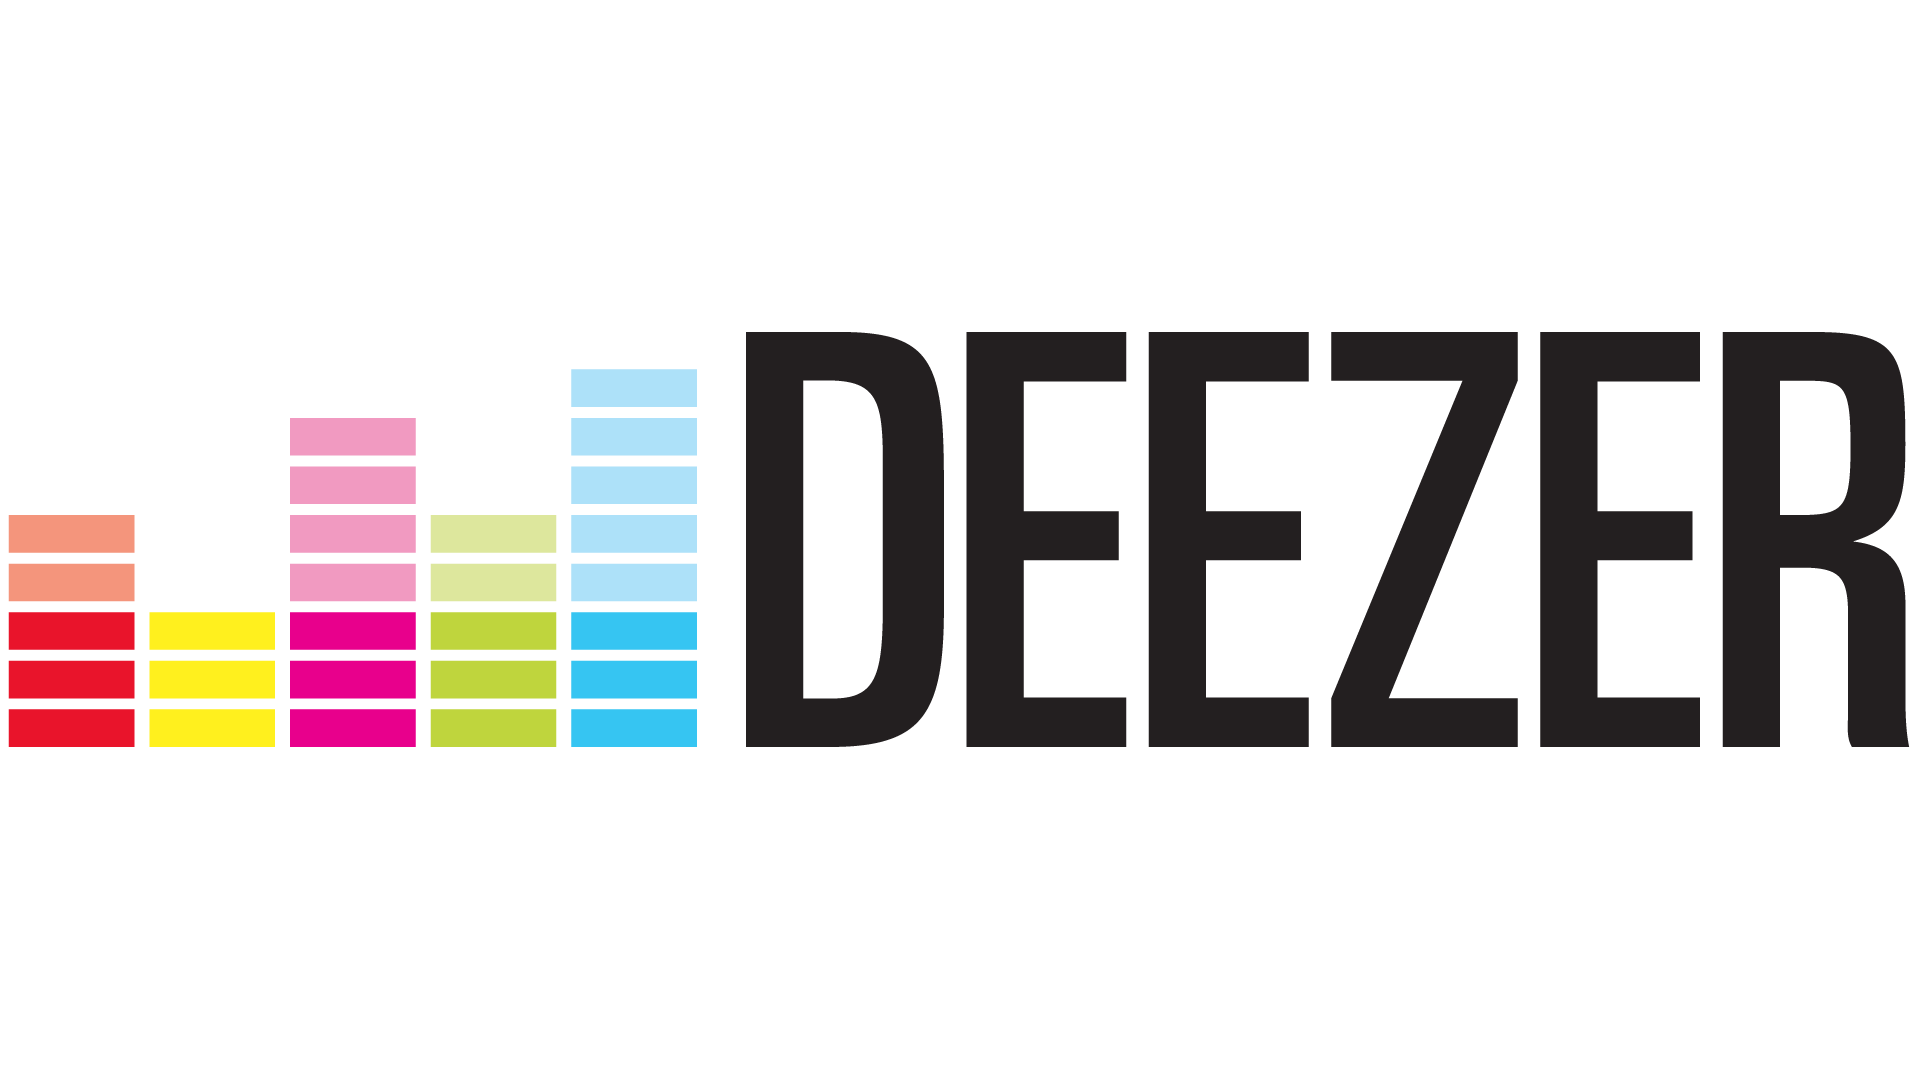 Deezer enters US, can it find a niche in a crowded market?